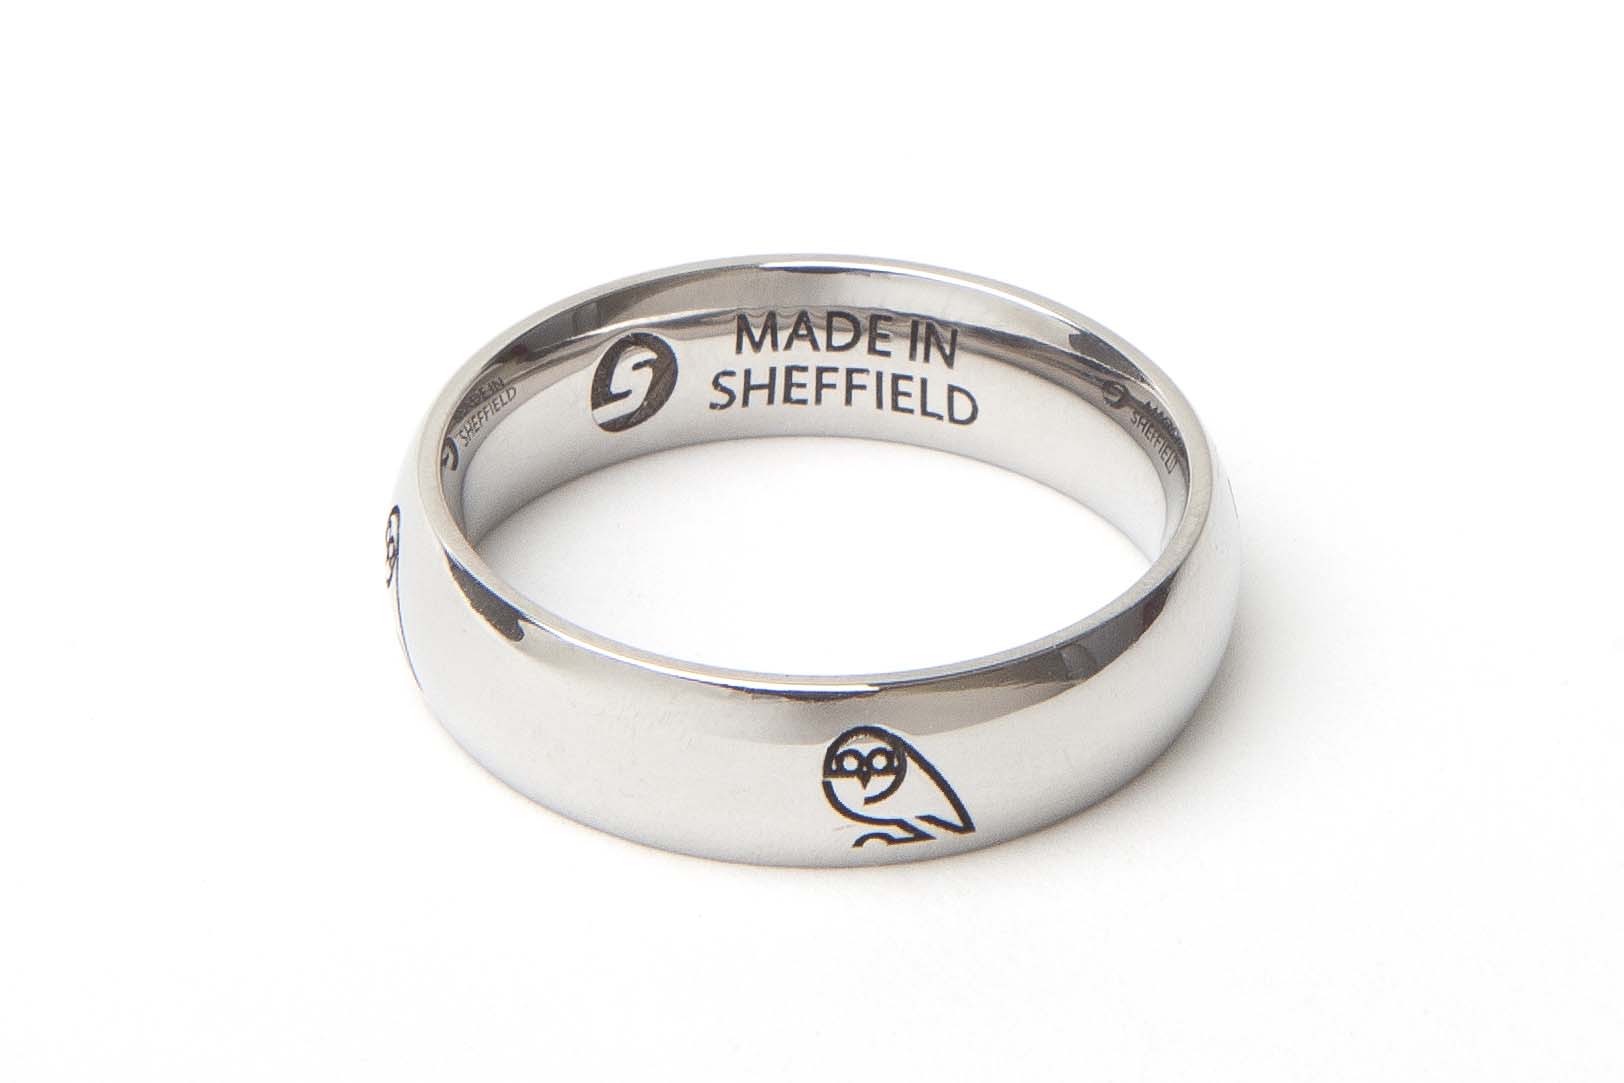 TIAGO Jewellery |Sheffield Jewellers | Home of the Sheffield Steel Wedding Rings | 100% Guaranteed Sheffield Steel |Steel Ring | Steel Wedding Rings | Made in Sheffield | Sheffield Wednesday Football Club